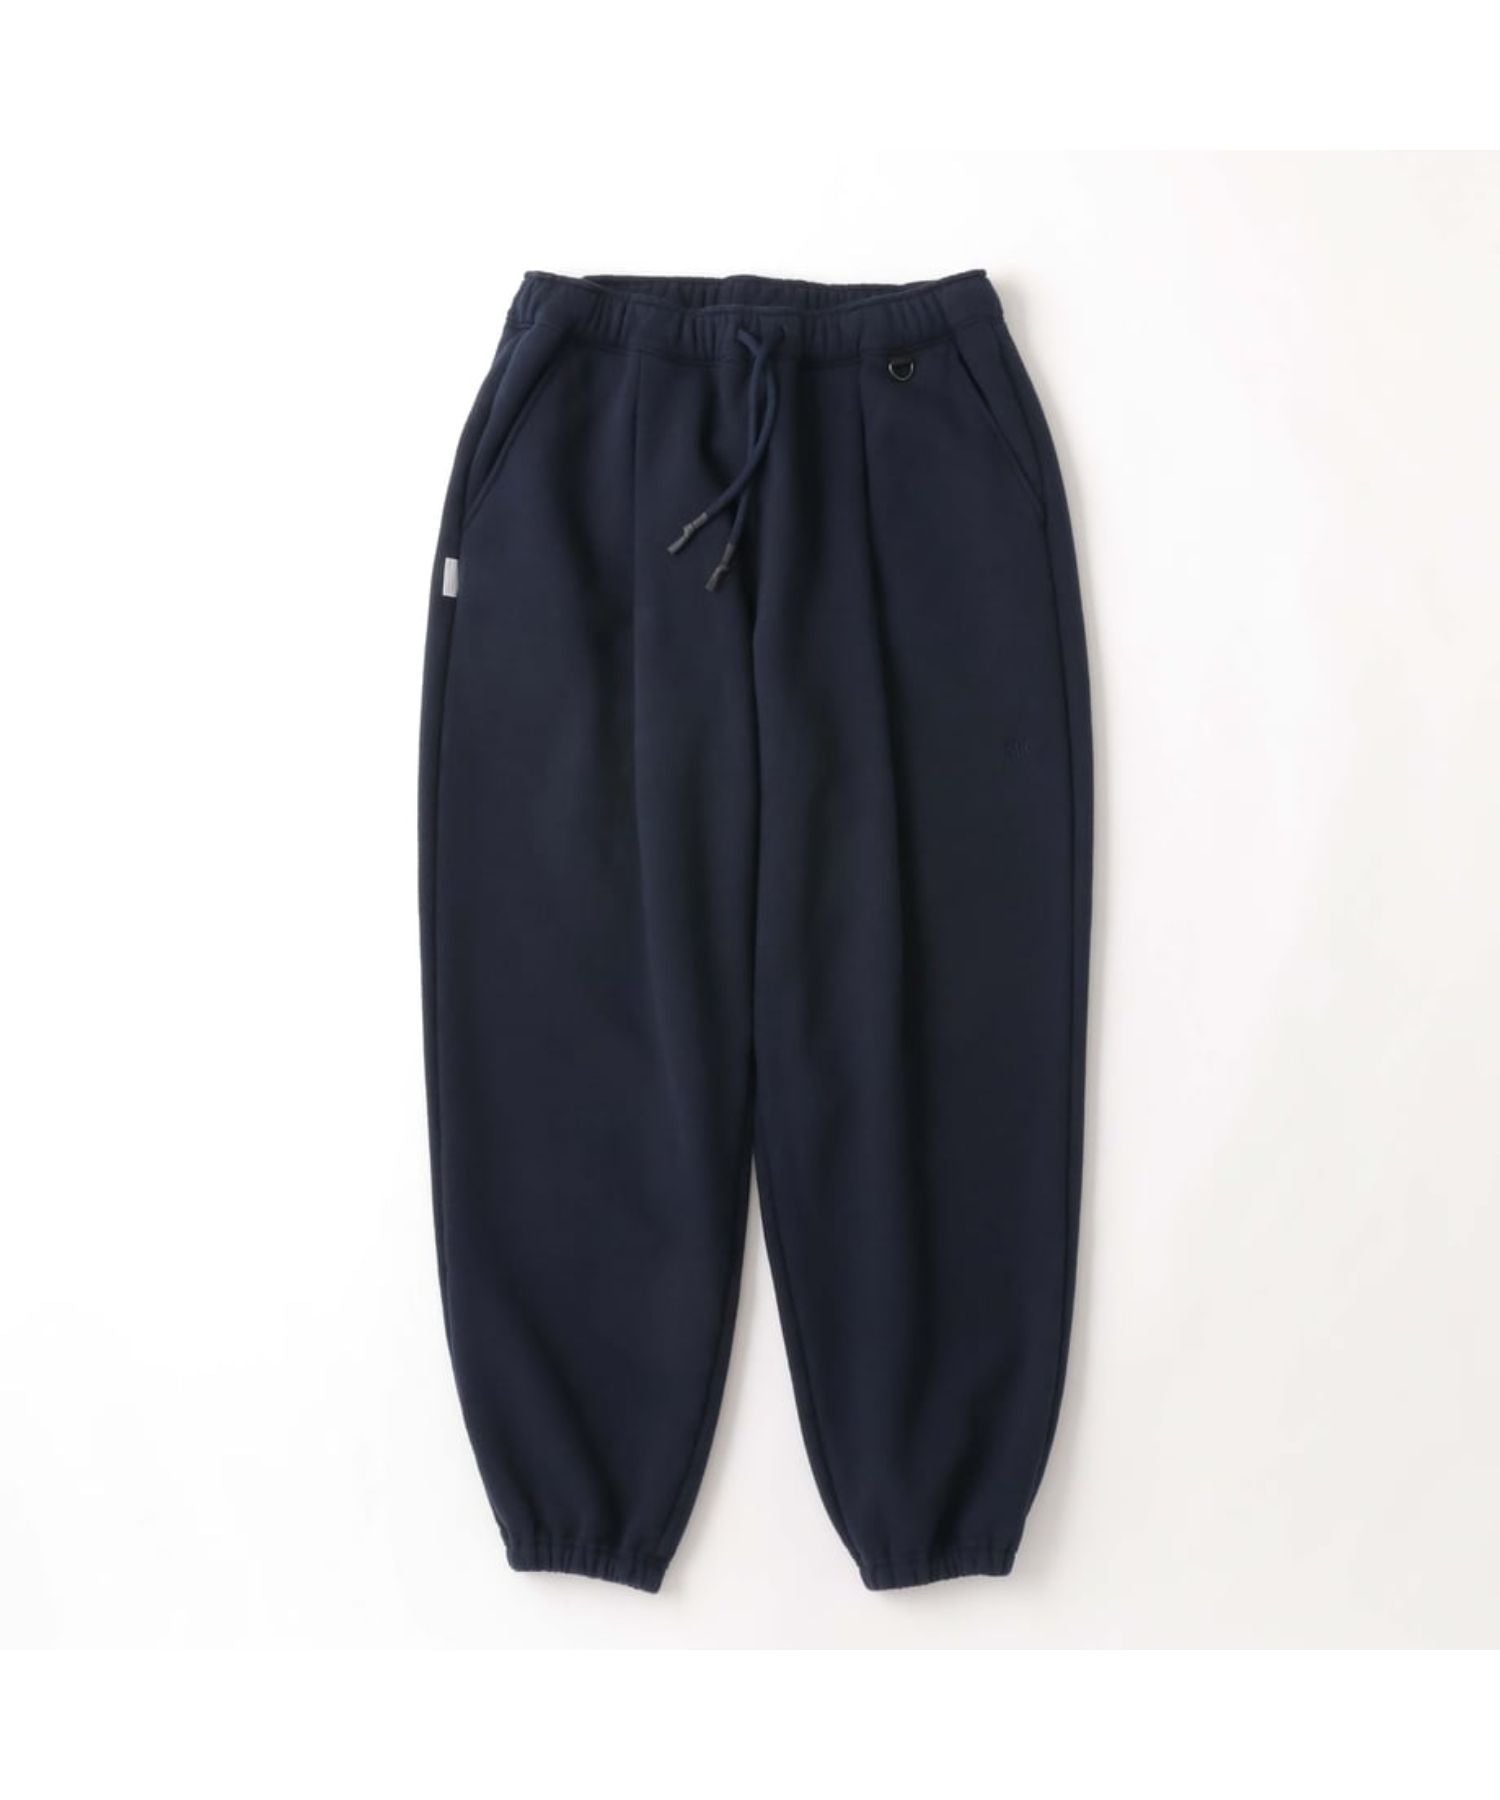 Wide Sweat Pants - S.F.C (Stripes For Creative) (エスエフシー